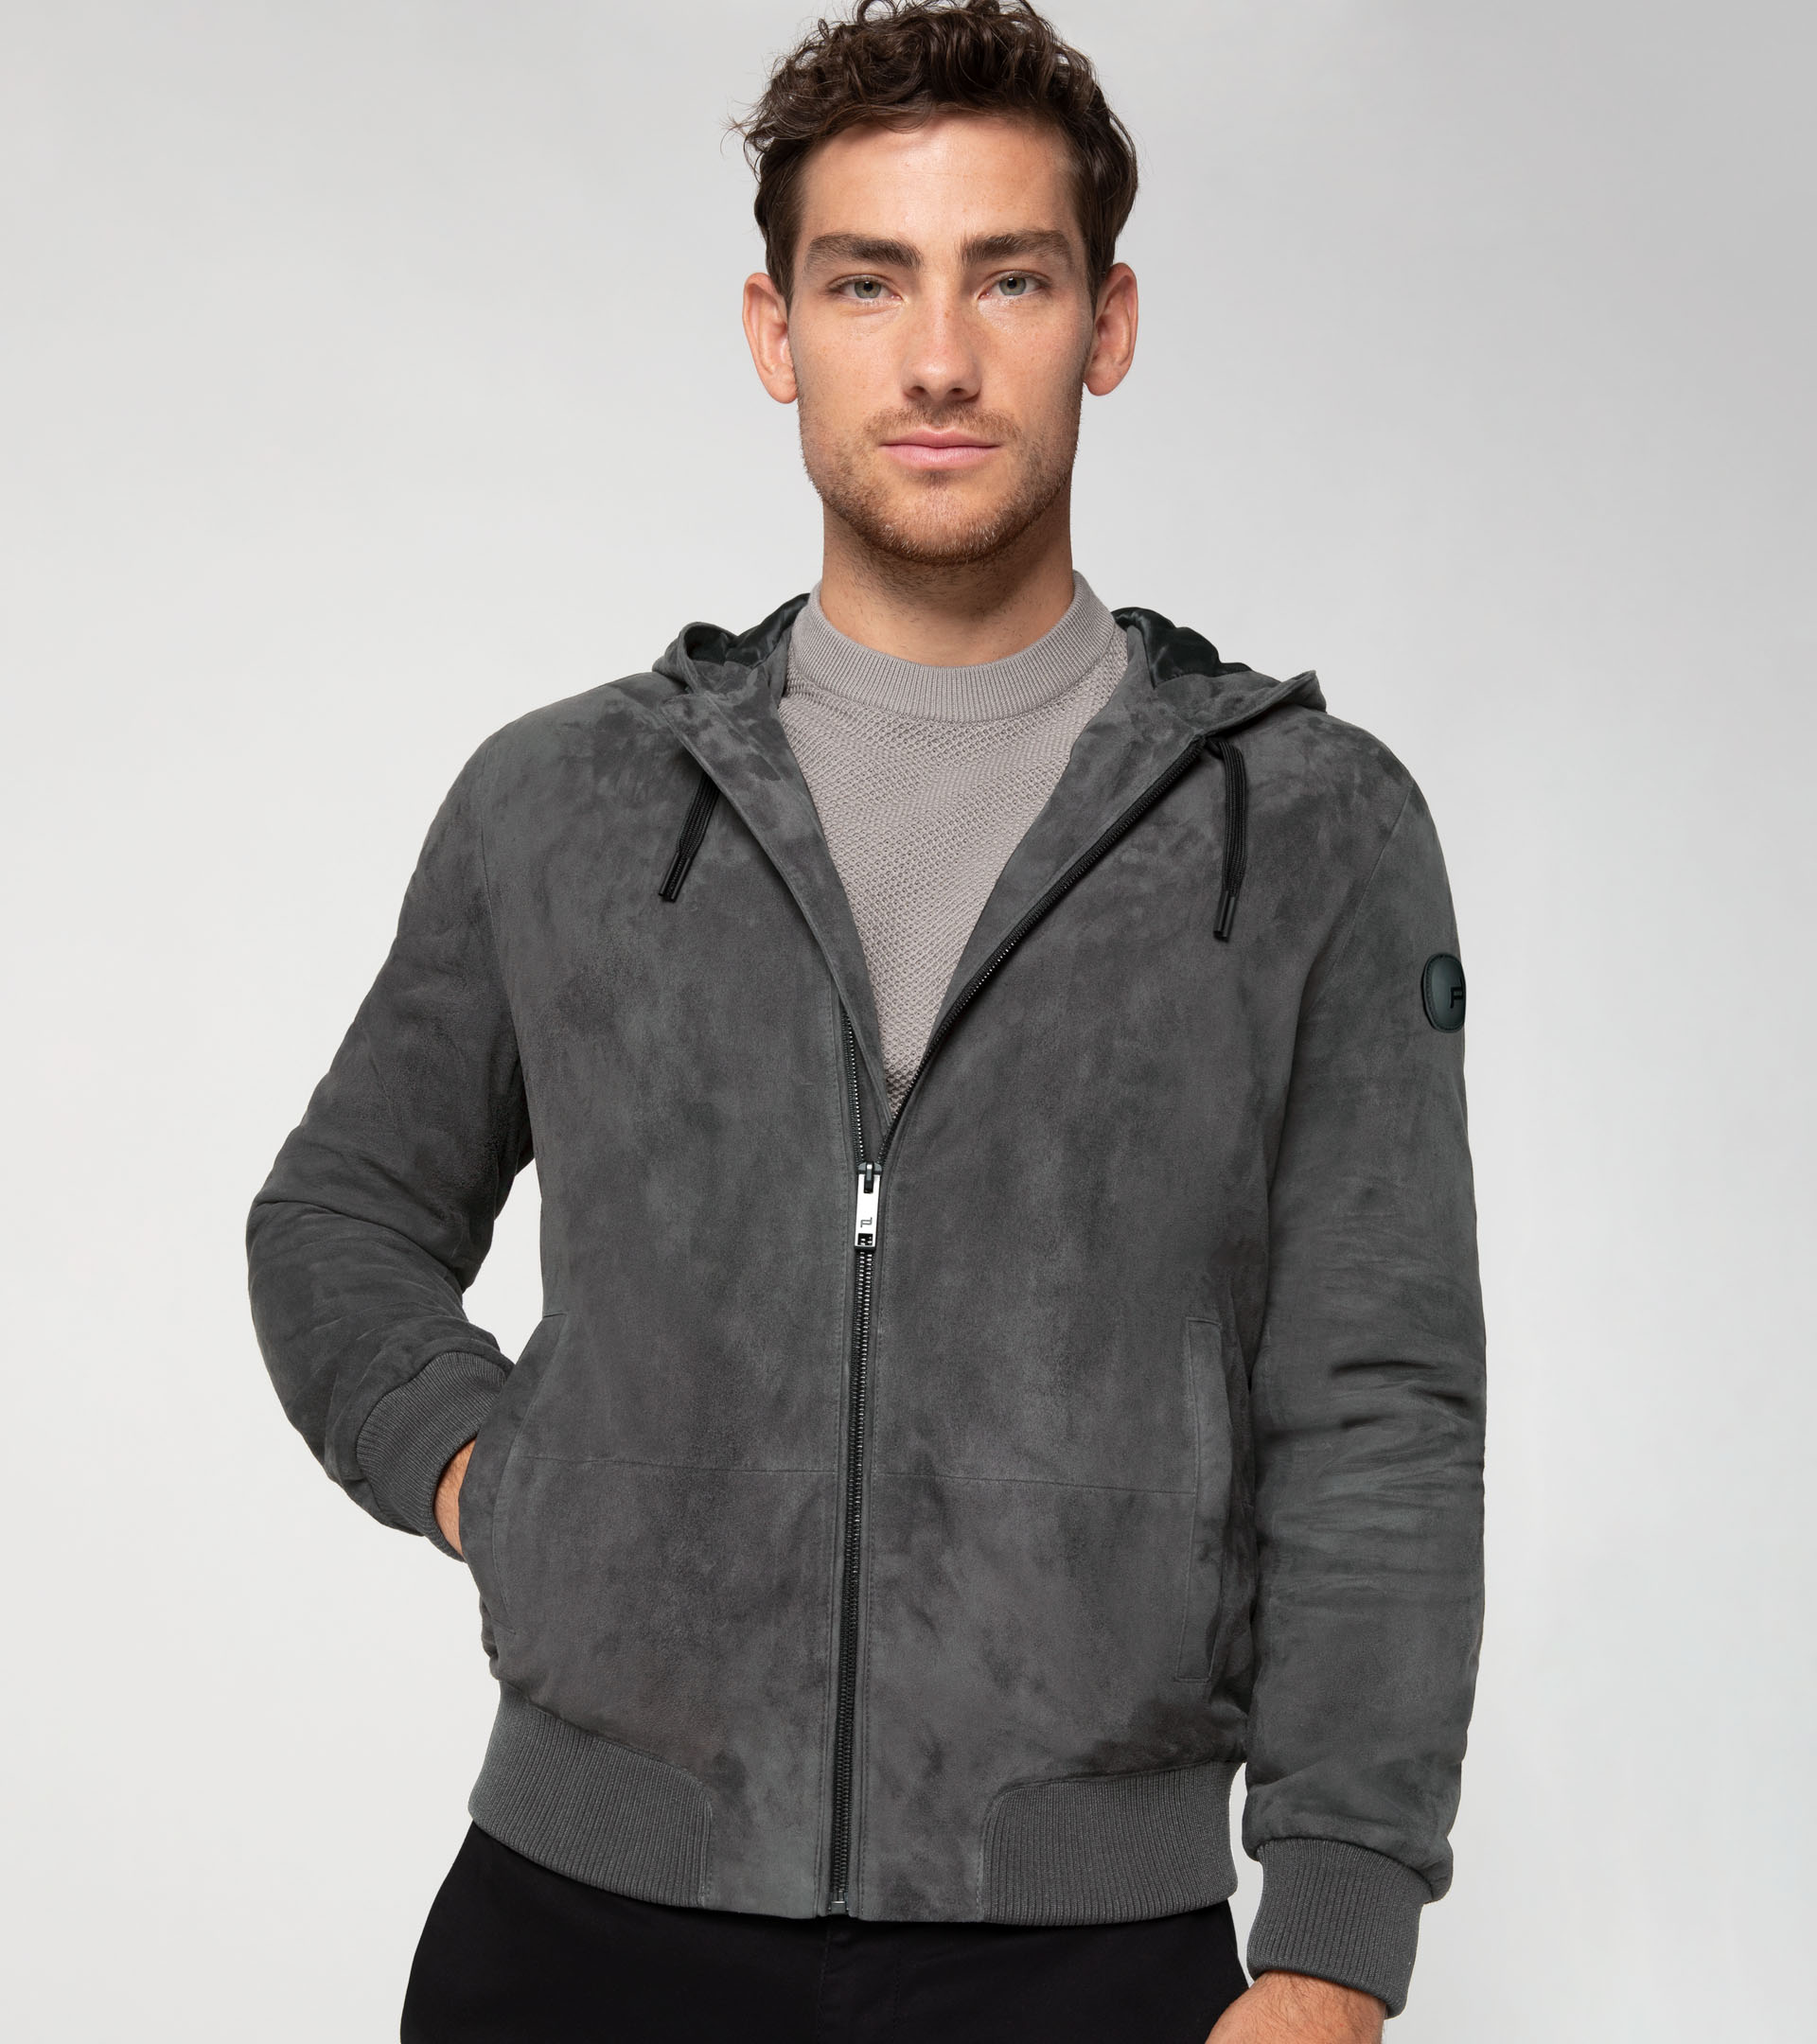 Suede leather jacket - Designer Men's Jackets & Coats | Porsche Design ...